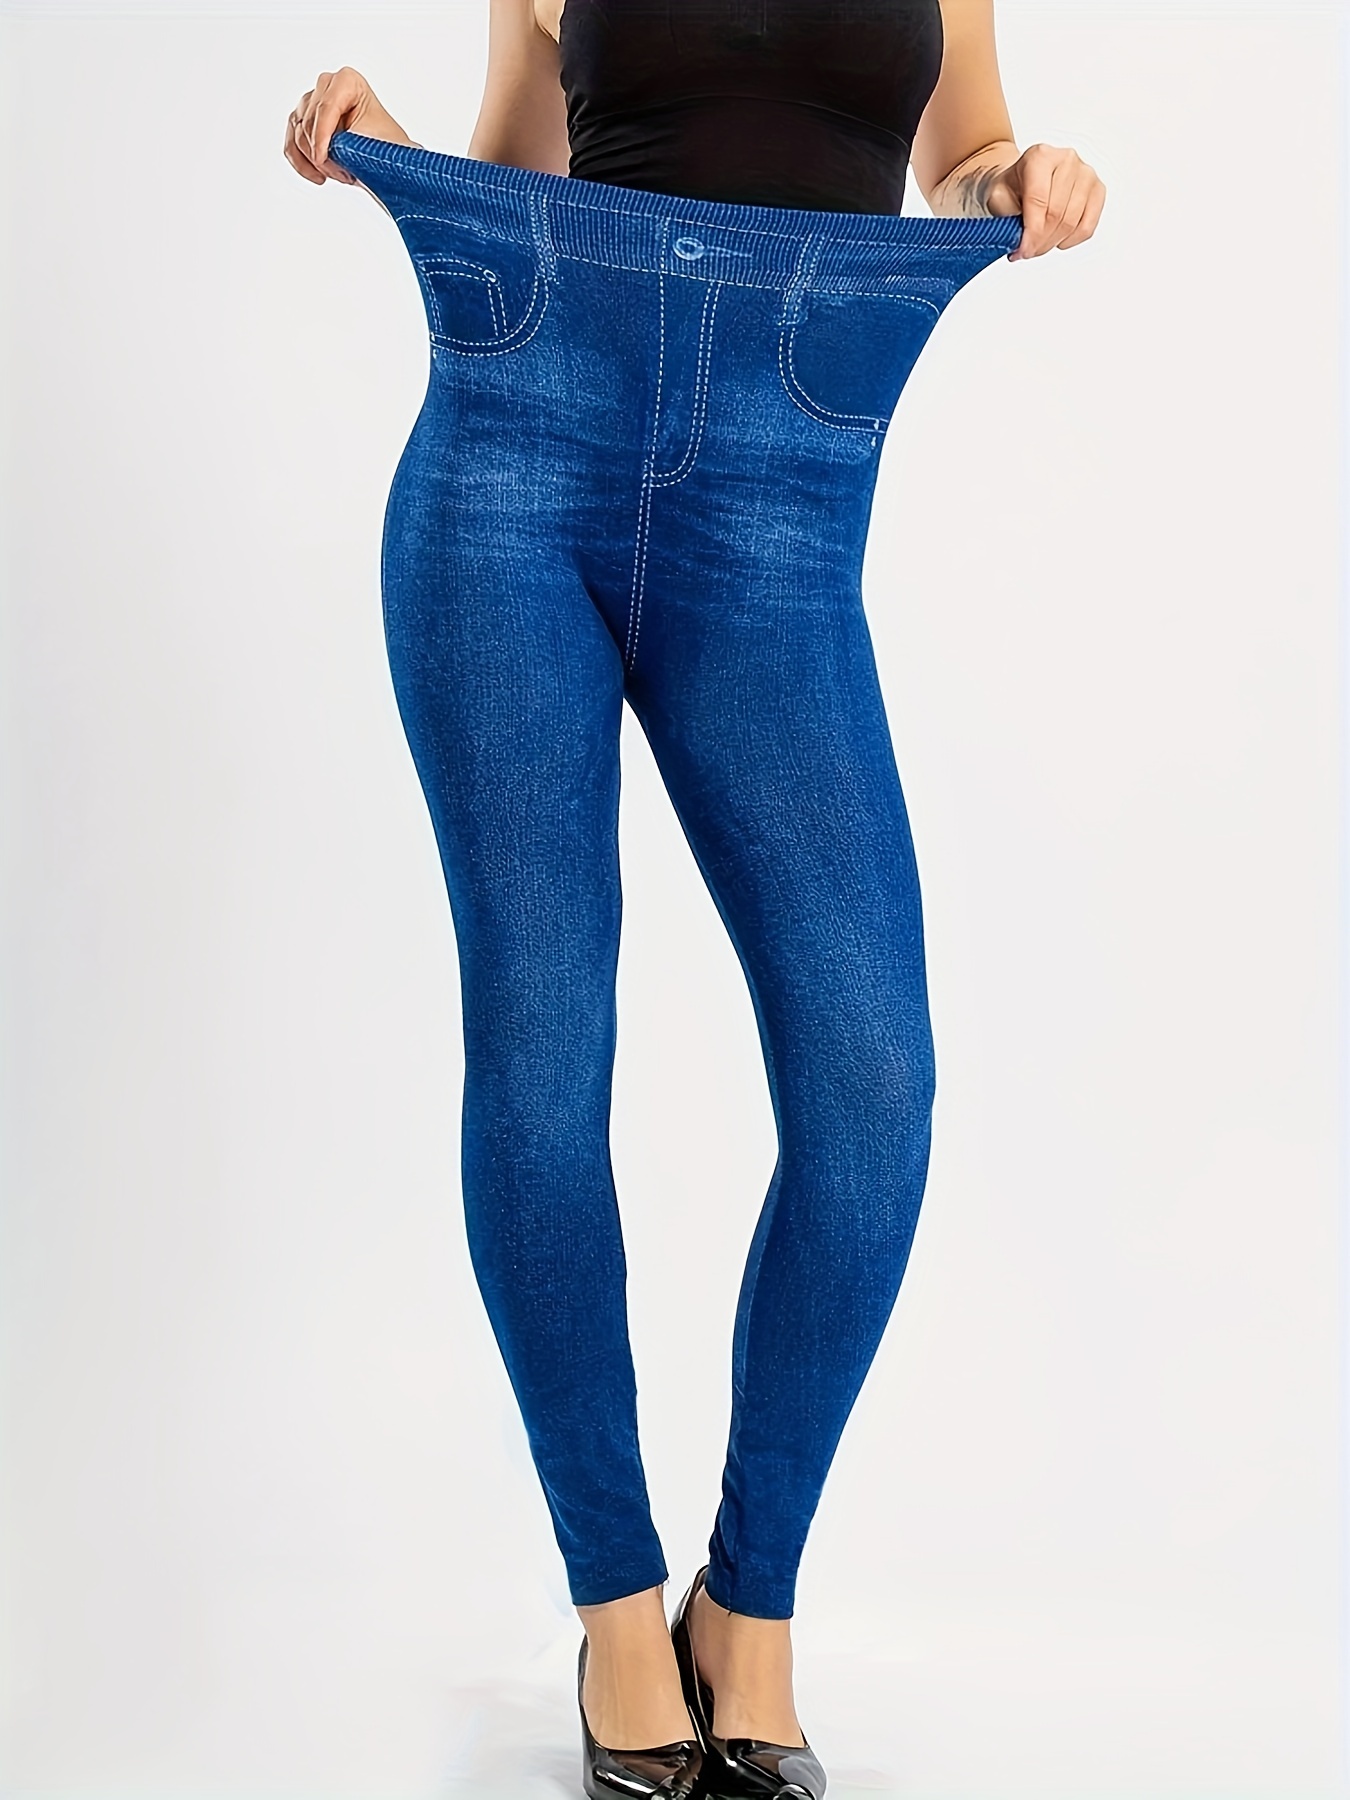 J. METHOD Women’s Skinny Pants Soft Everyday Solid Color Basic Slim Tight  Fit Stretch Legging Jeggings Jeans NEWP77 Dark Teal M